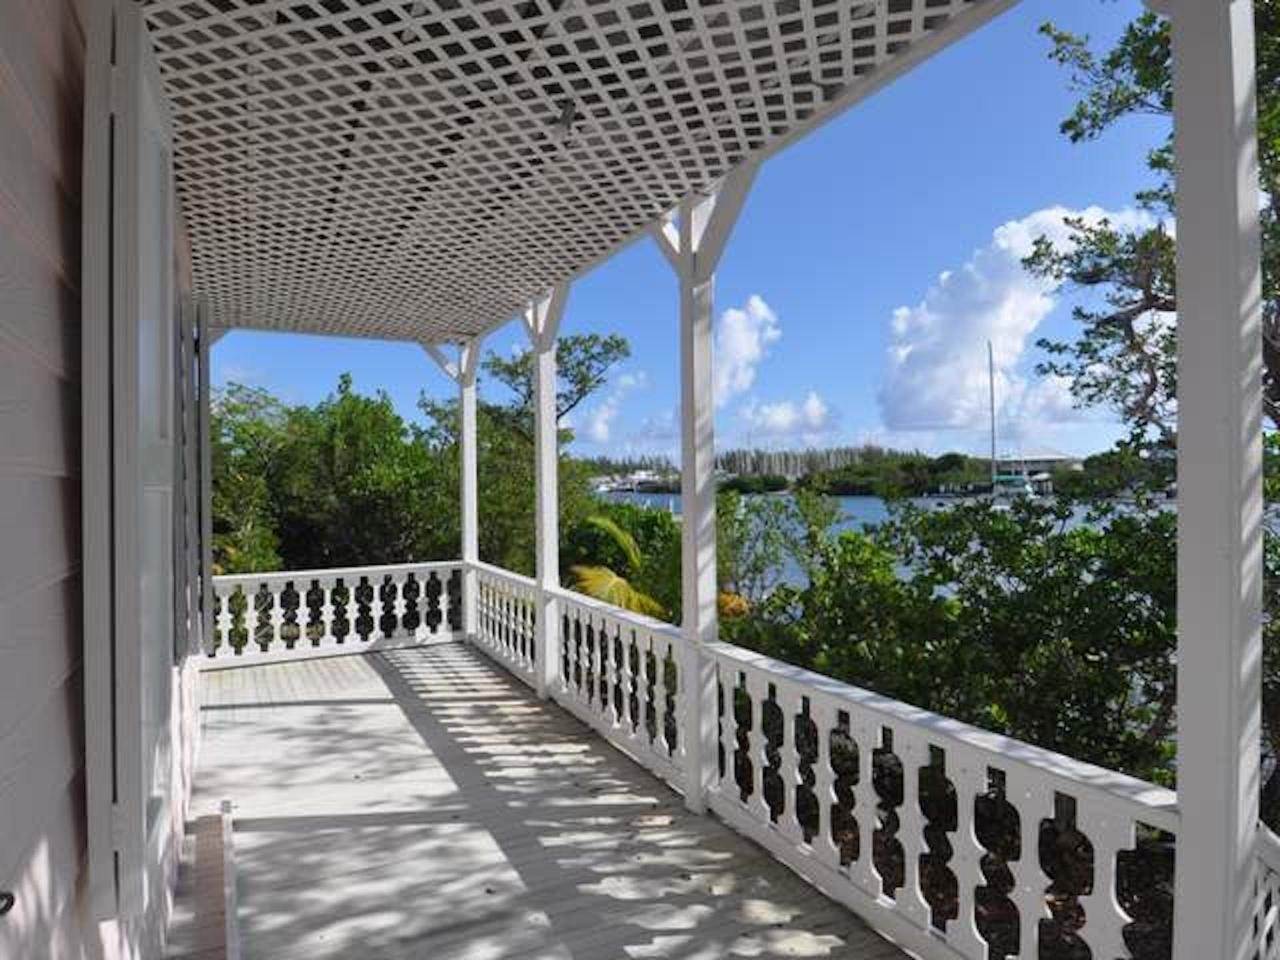 Single Family Homes für Verkauf beim Black Sound, Green Turtle Cay, Abaco, Bahamas